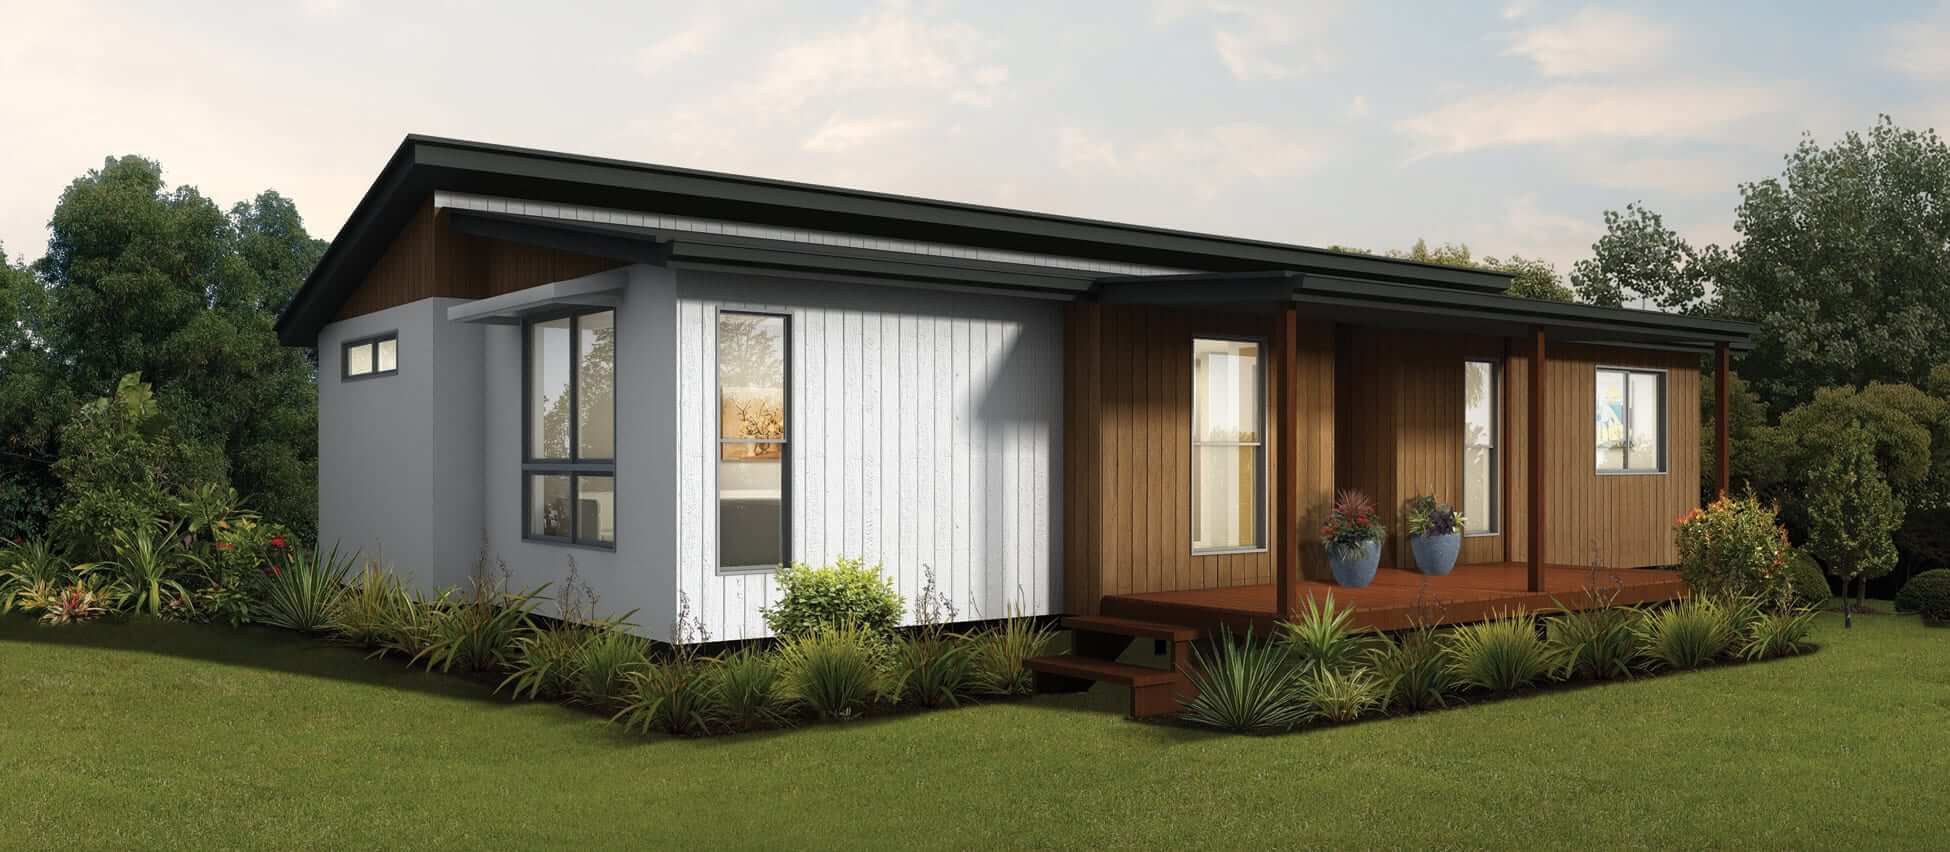 3 Bedroom Modular Home Brisbane Design Hinterland 100